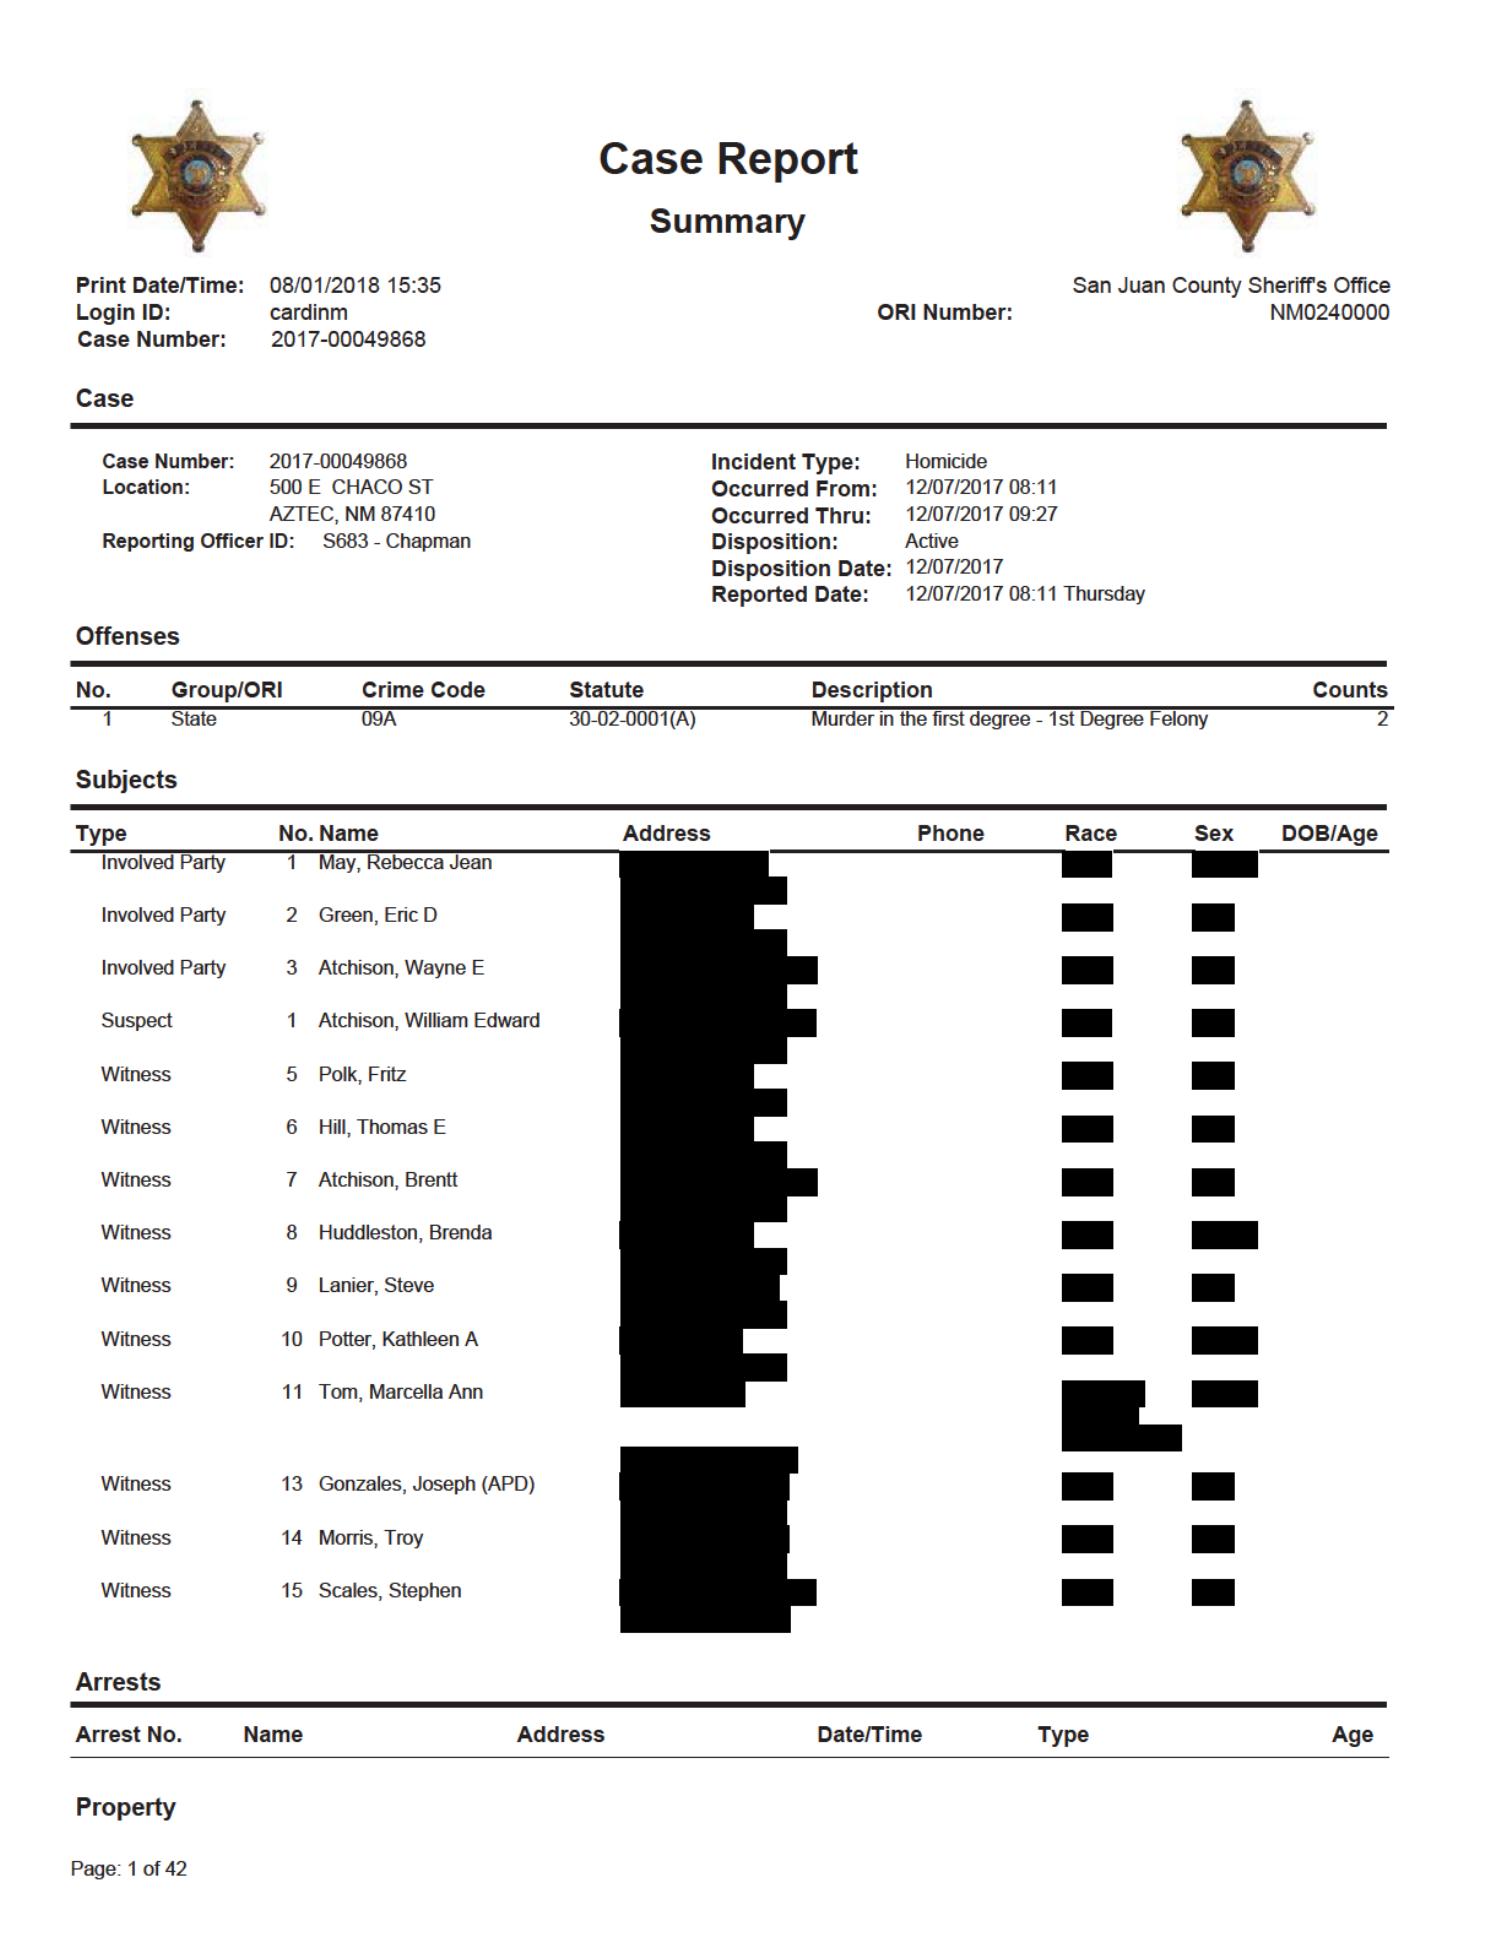 redacted pdf failed